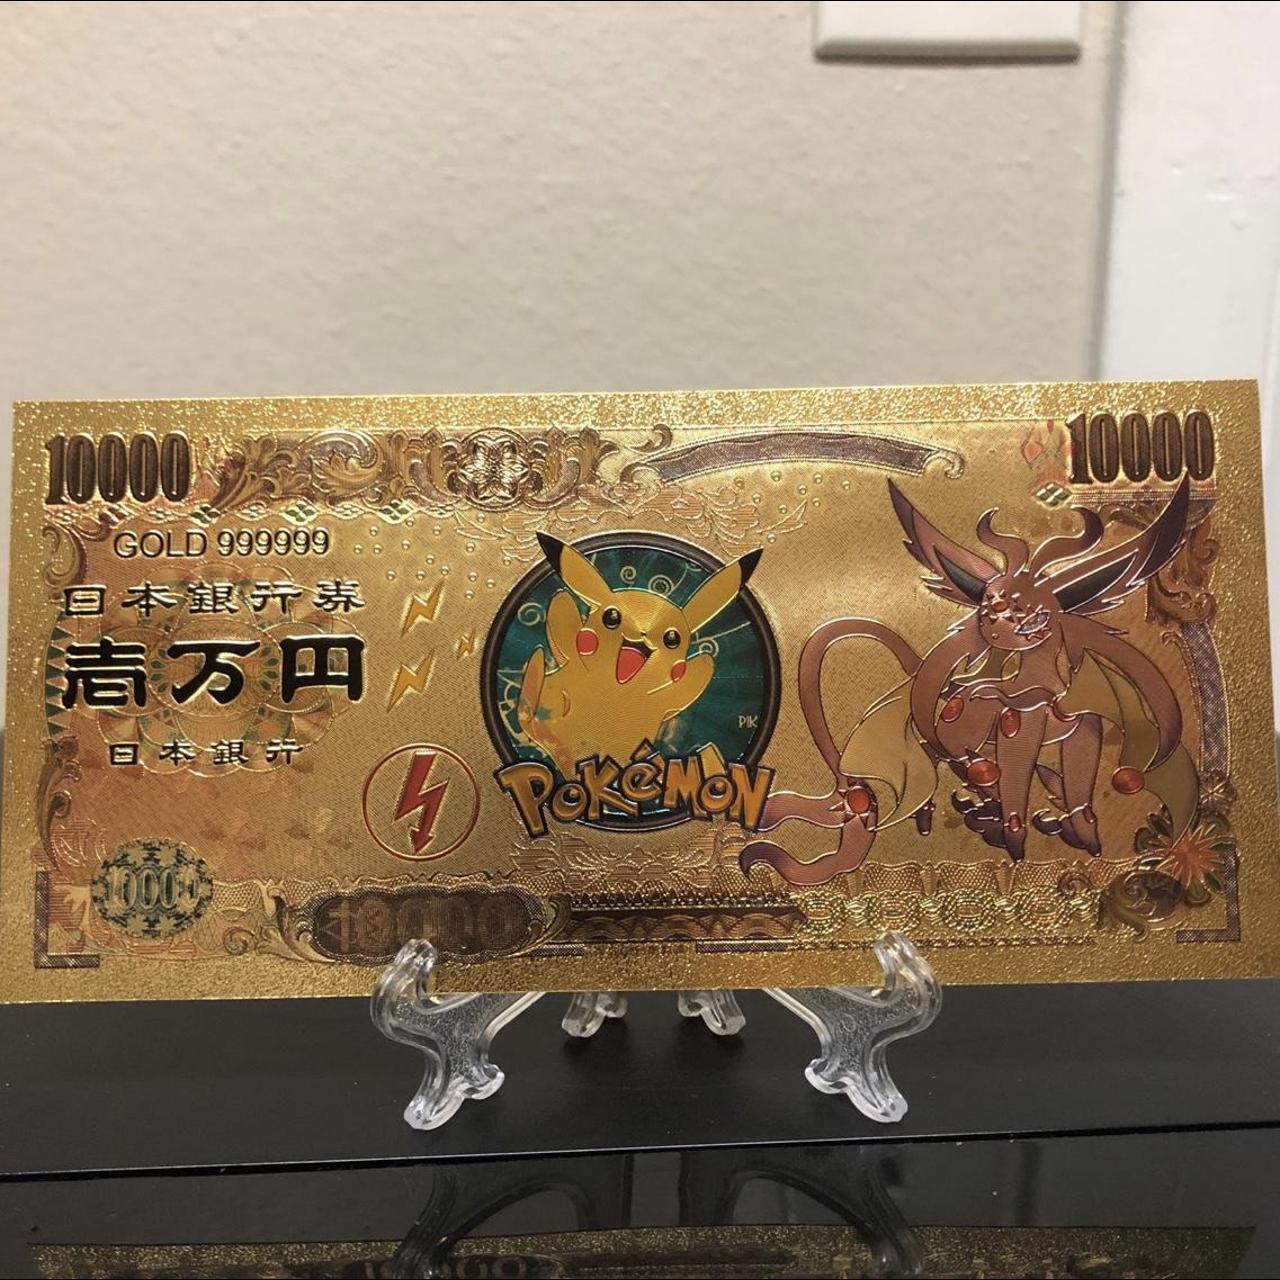 Eevee (Pokémon) 24k Gold Plated Banknote (Not real - Depop